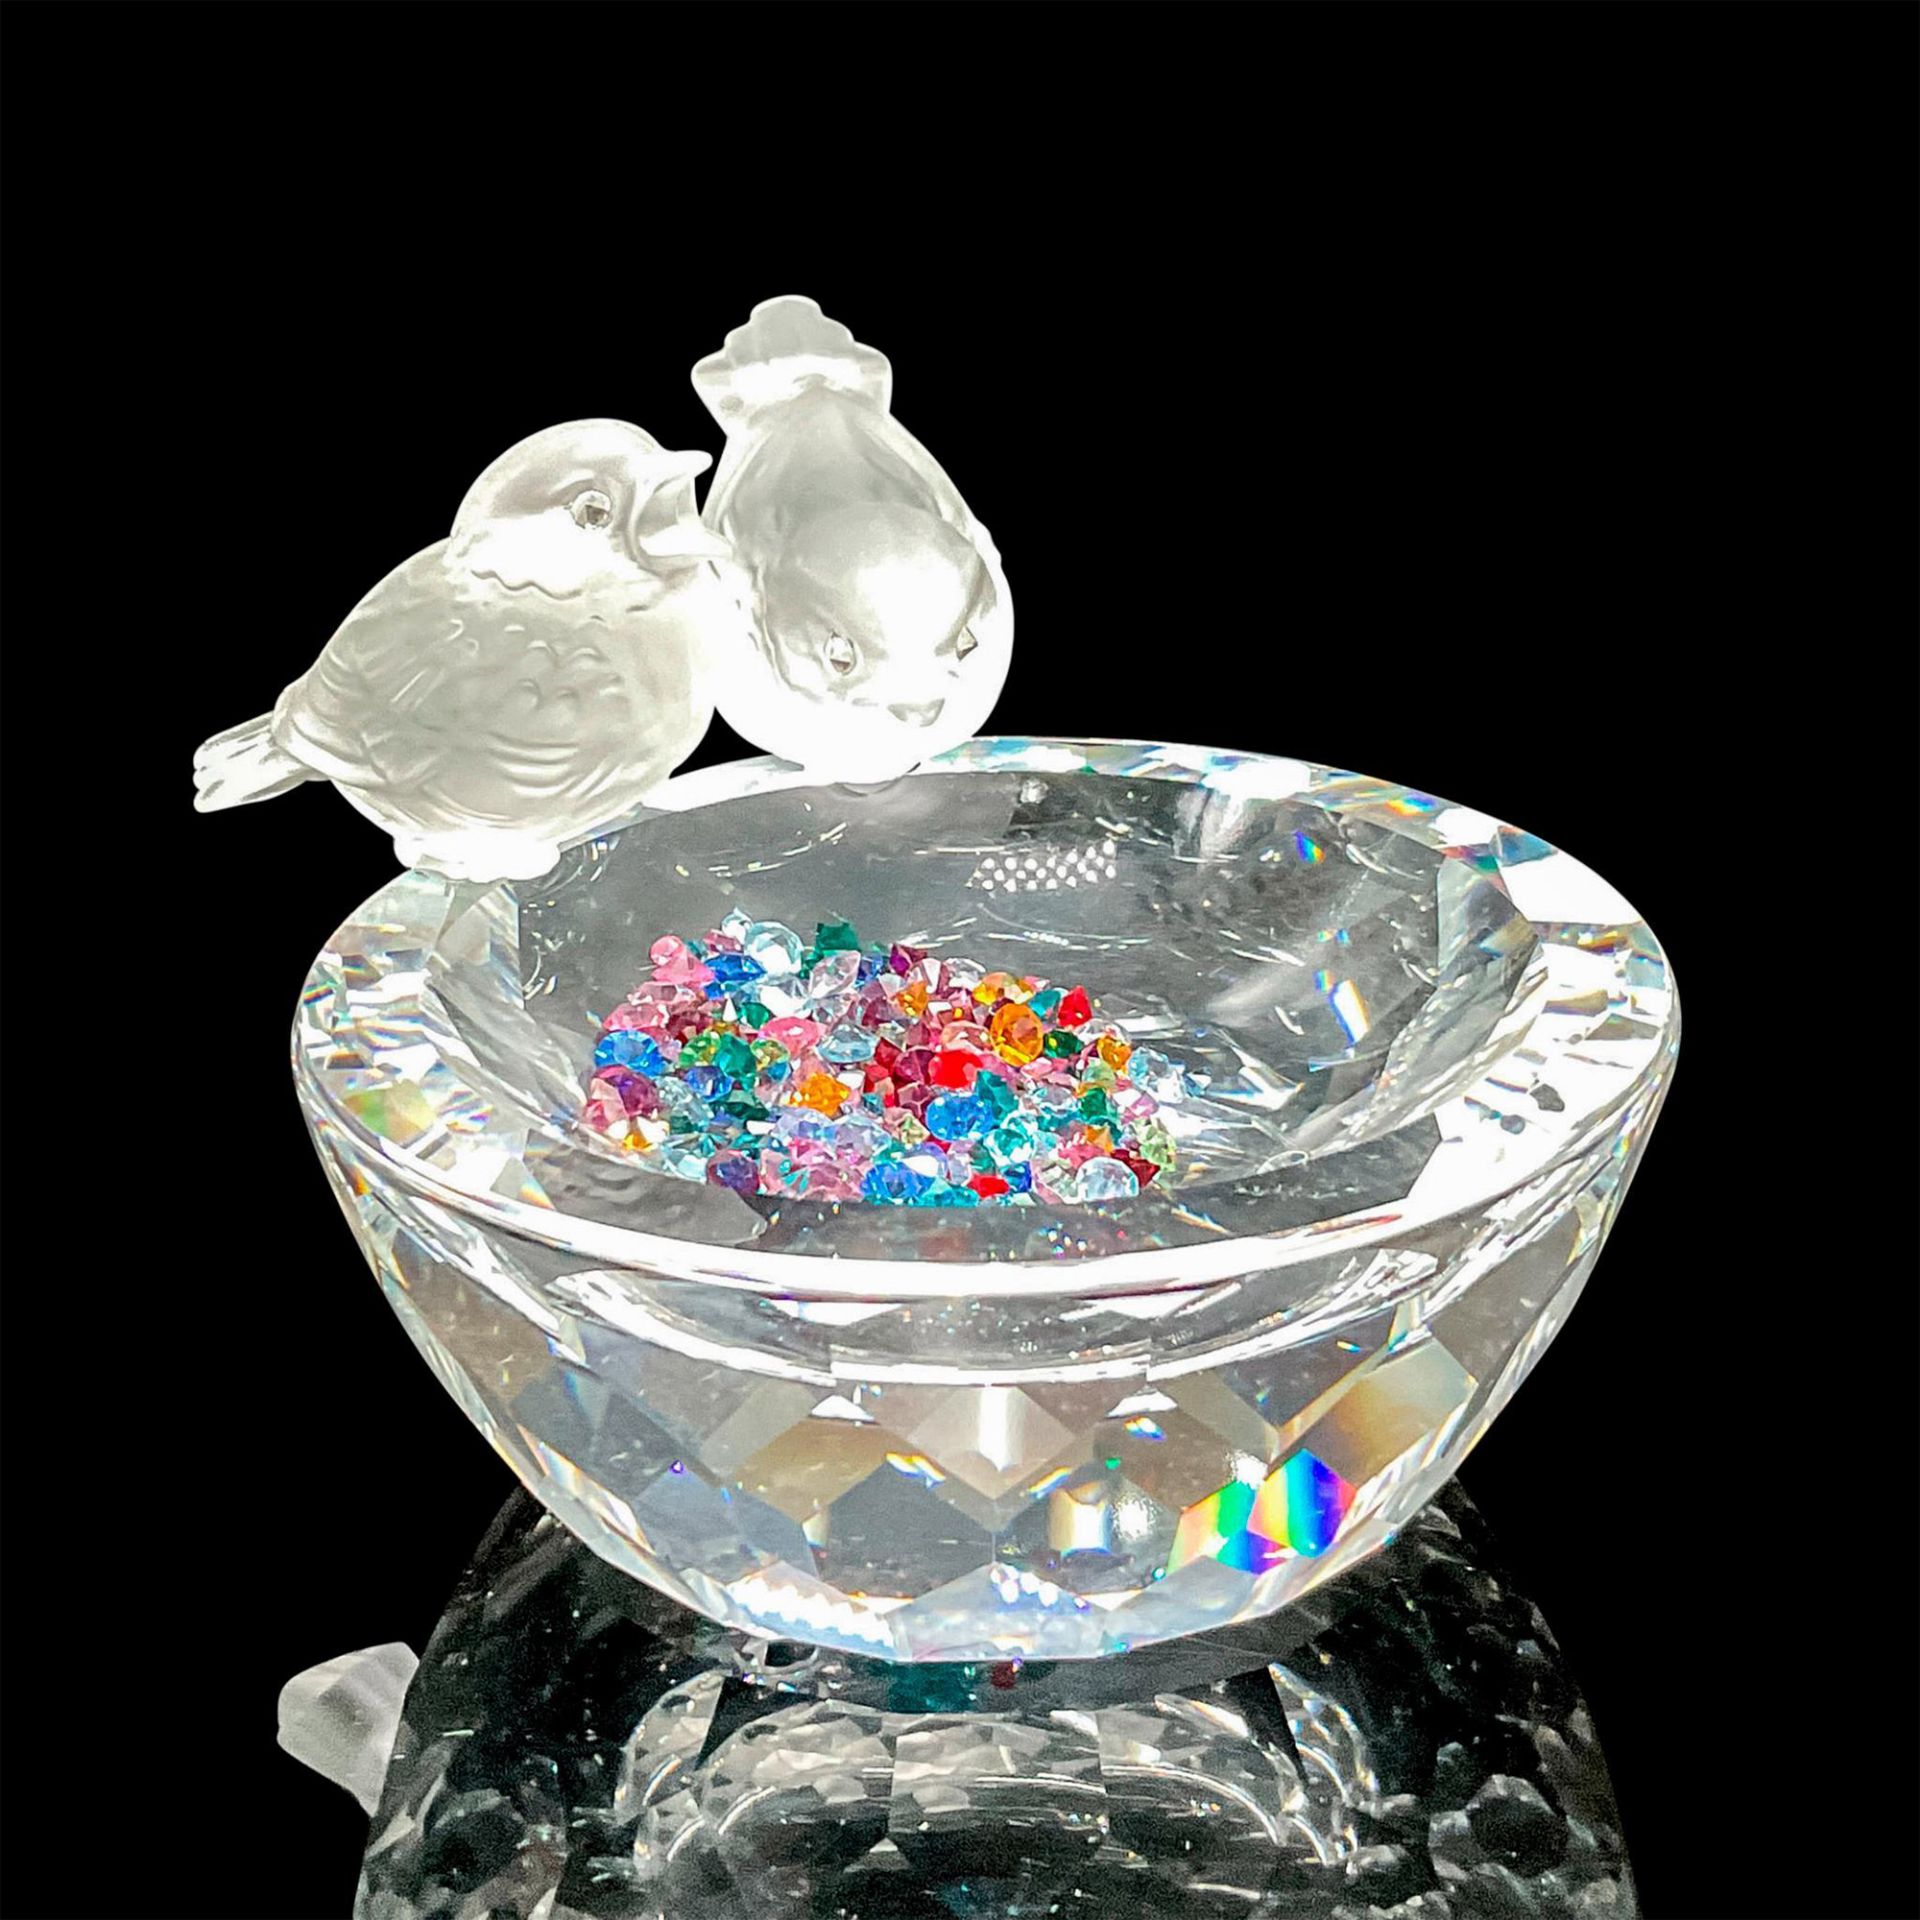 Swarovski Silver Crystal Figurine, Bird Bath + Loose Crystals - Image 2 of 4